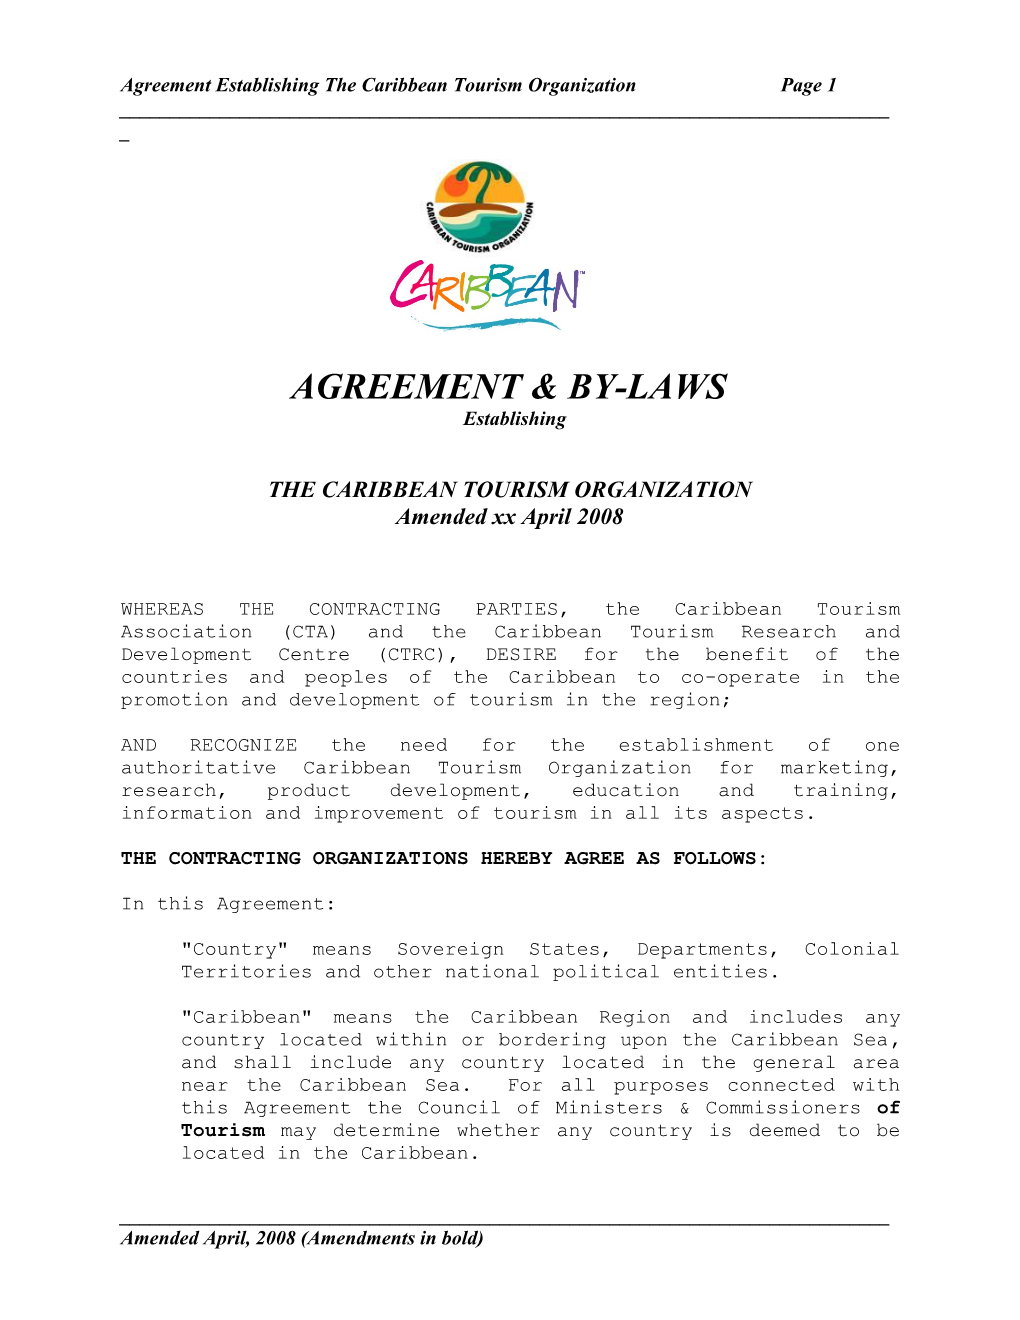 Agreement Establishing the Caribbean Tourism Organizationpage 1